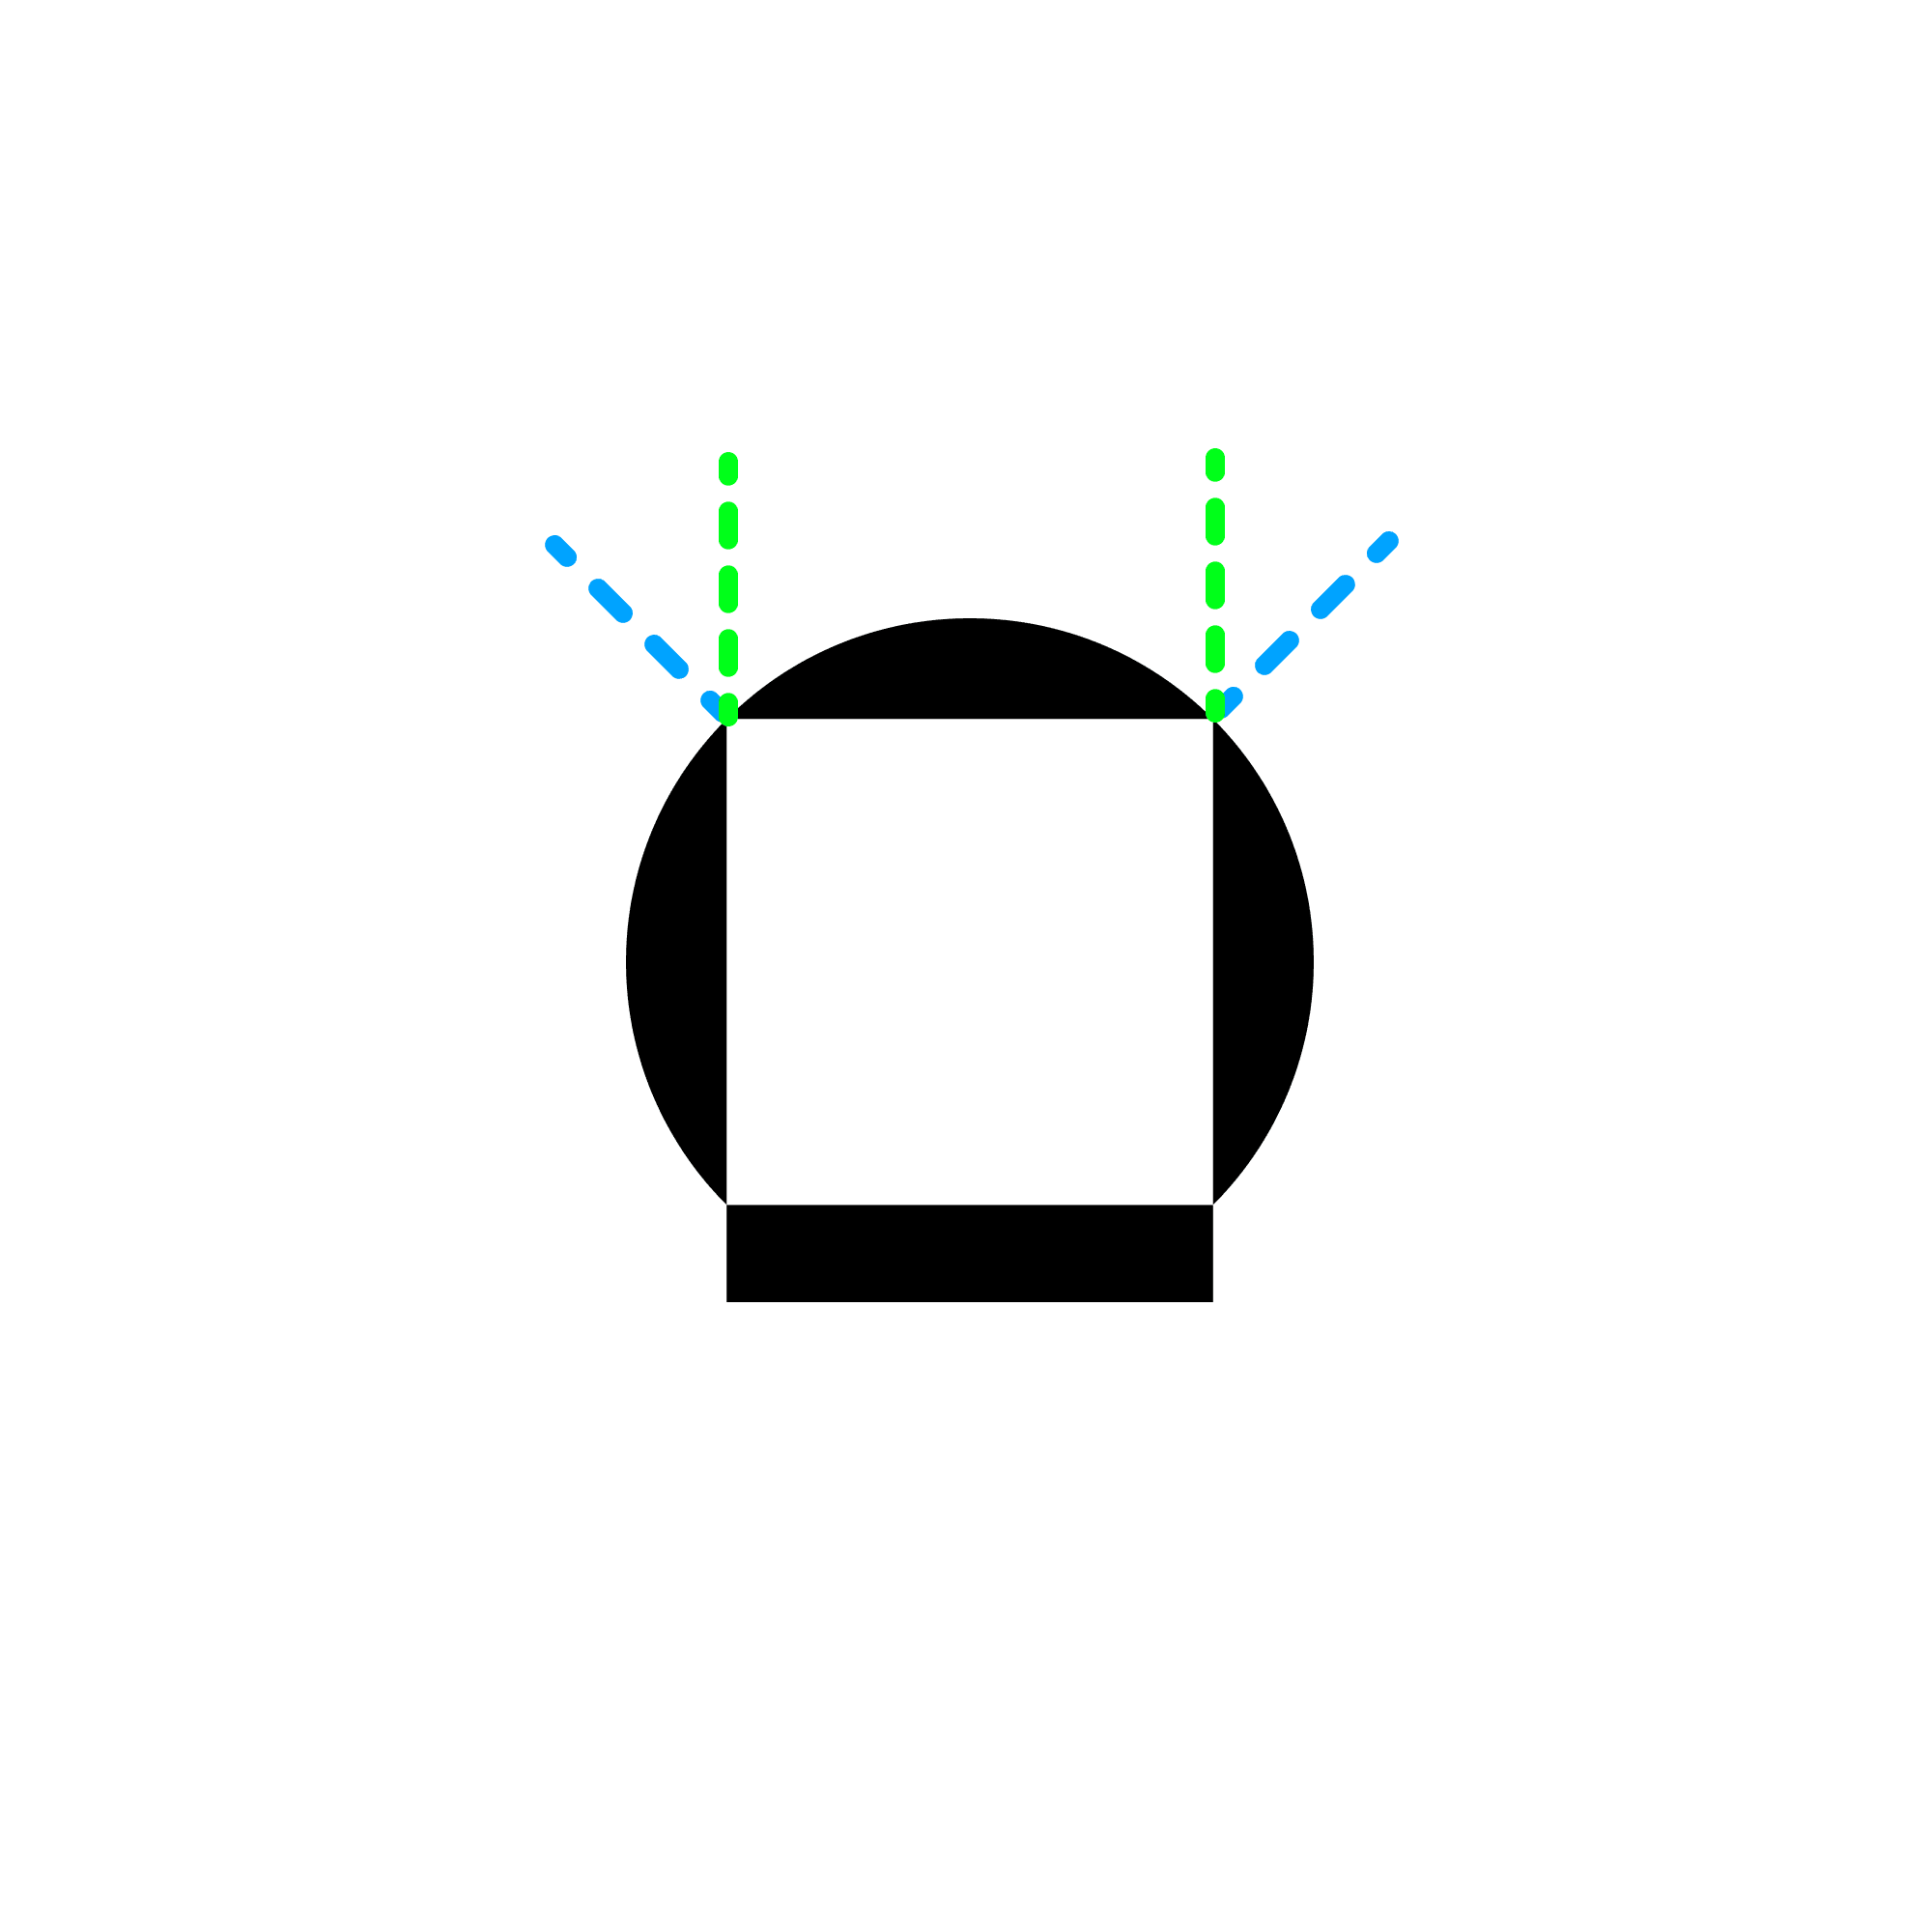 Blueprint of 'corner' helmet pattern.